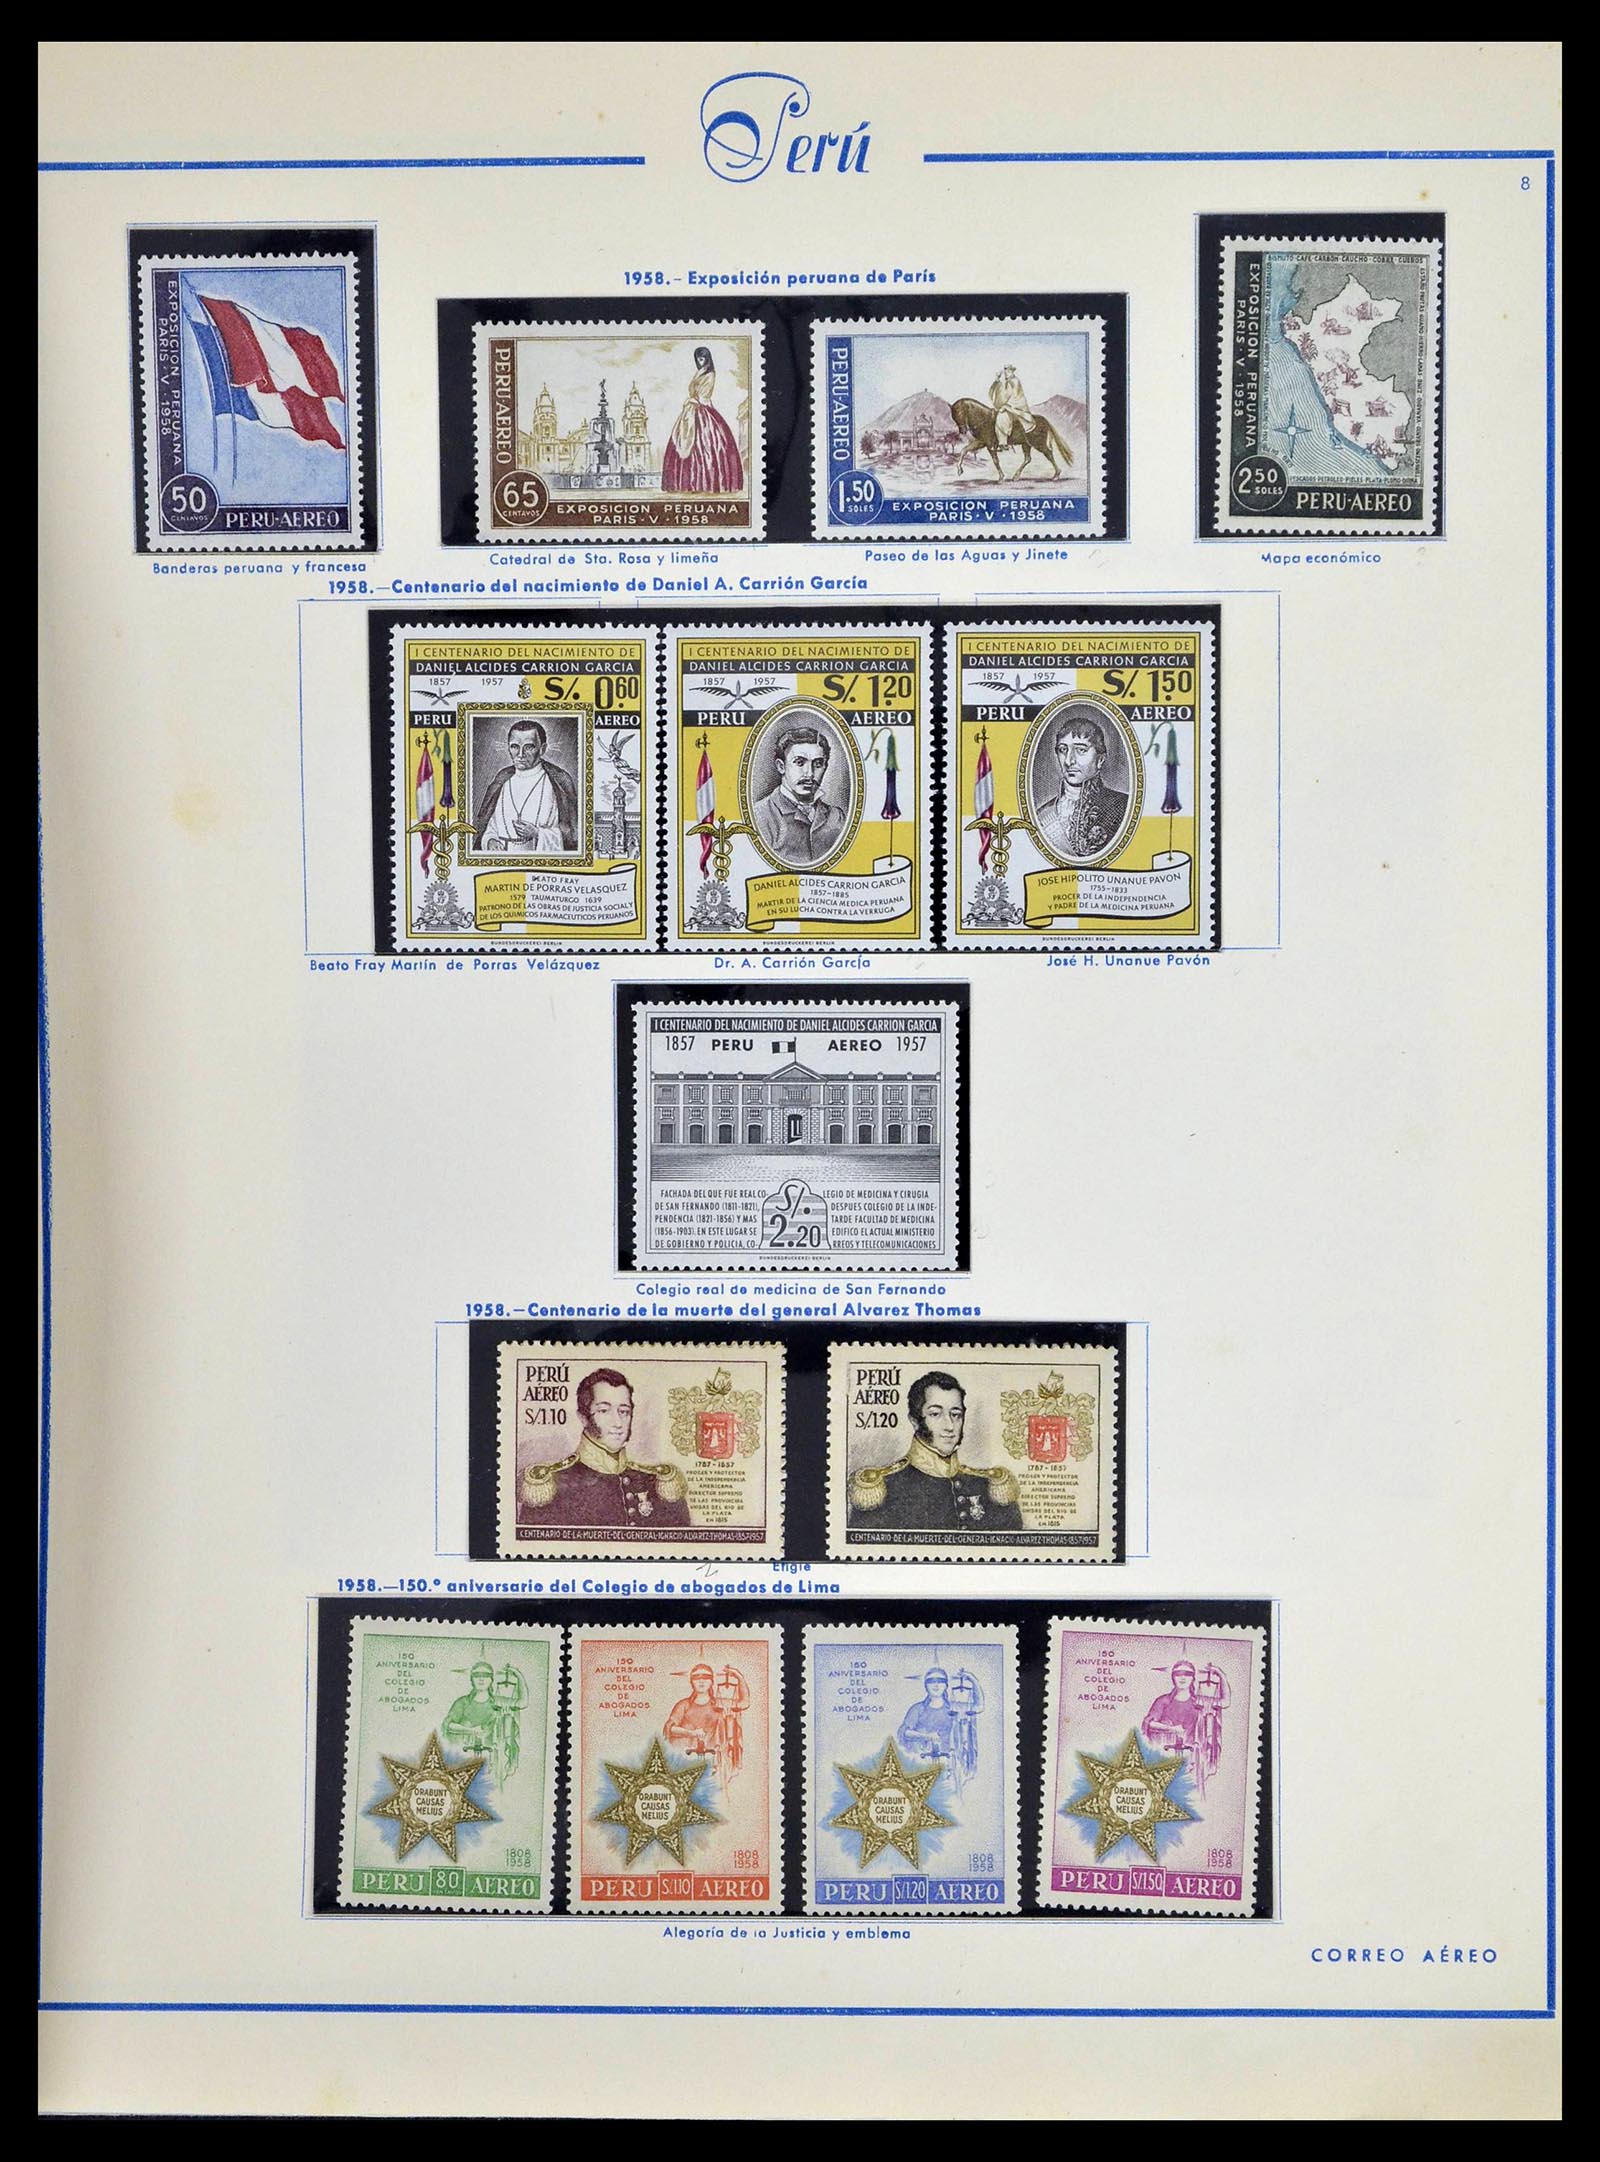 39214 0053 - Stamp collection 39214 Peru 1857-1981.